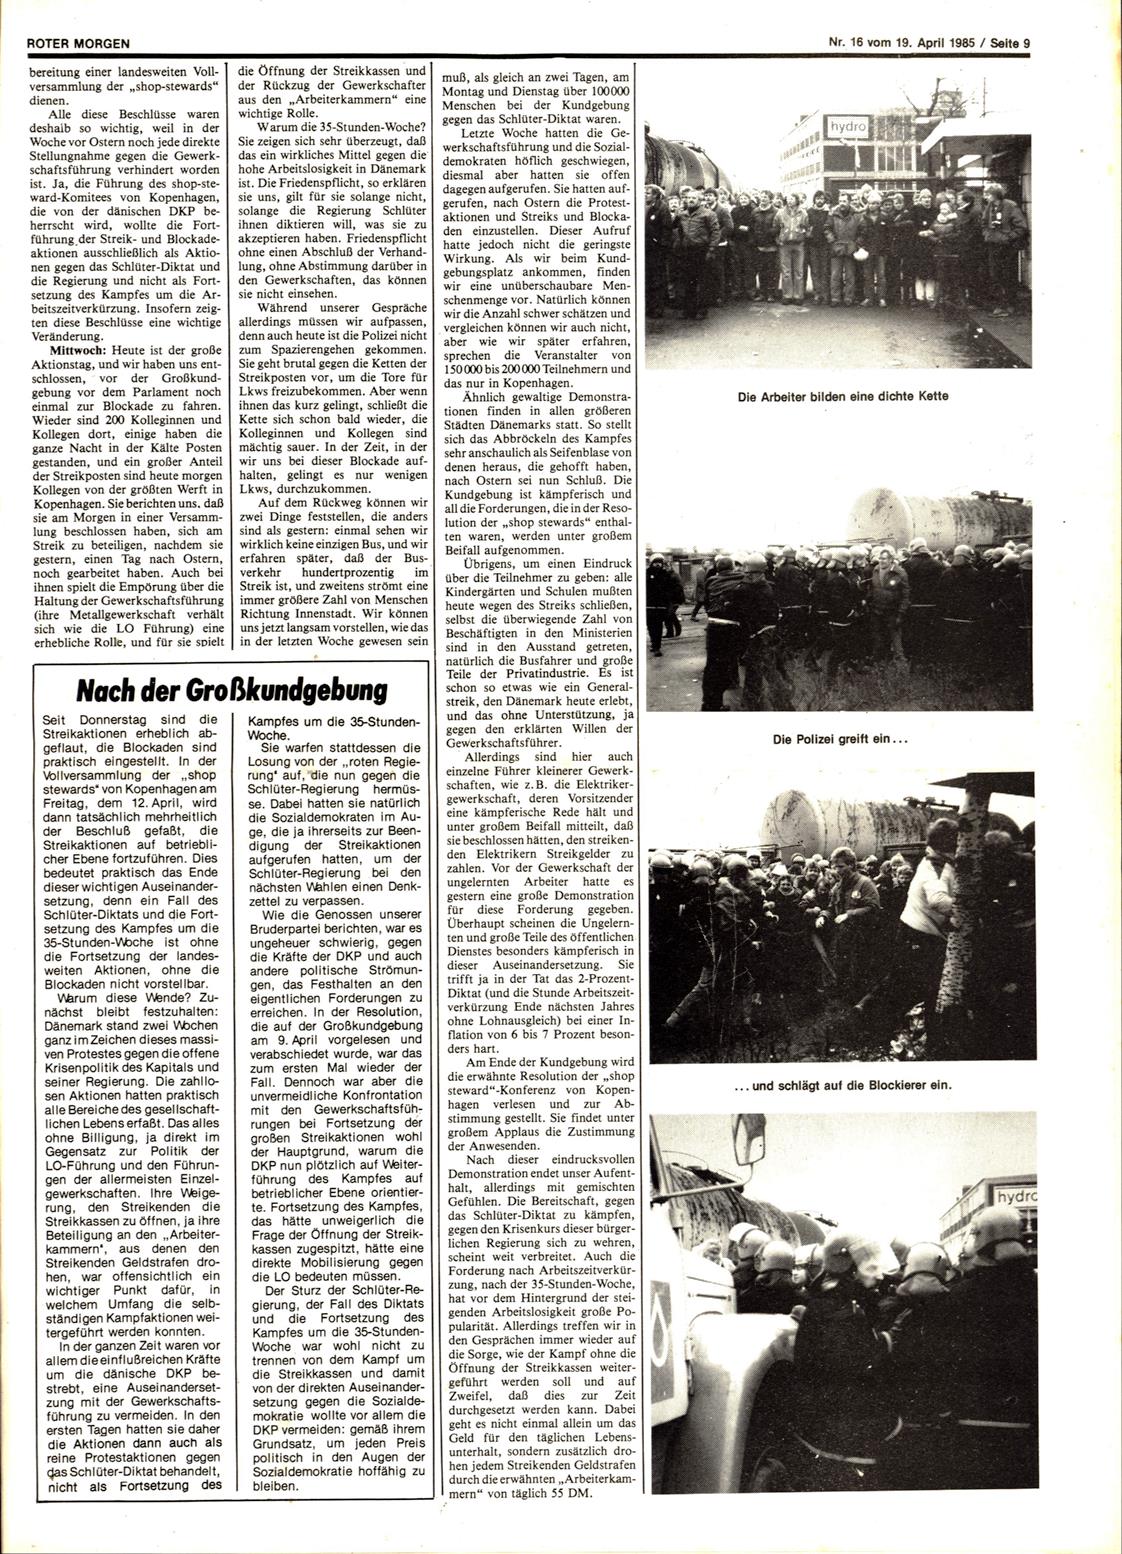 Roter Morgen, 19. Jg., 19. April 1985, Nr. 16, Seite 9